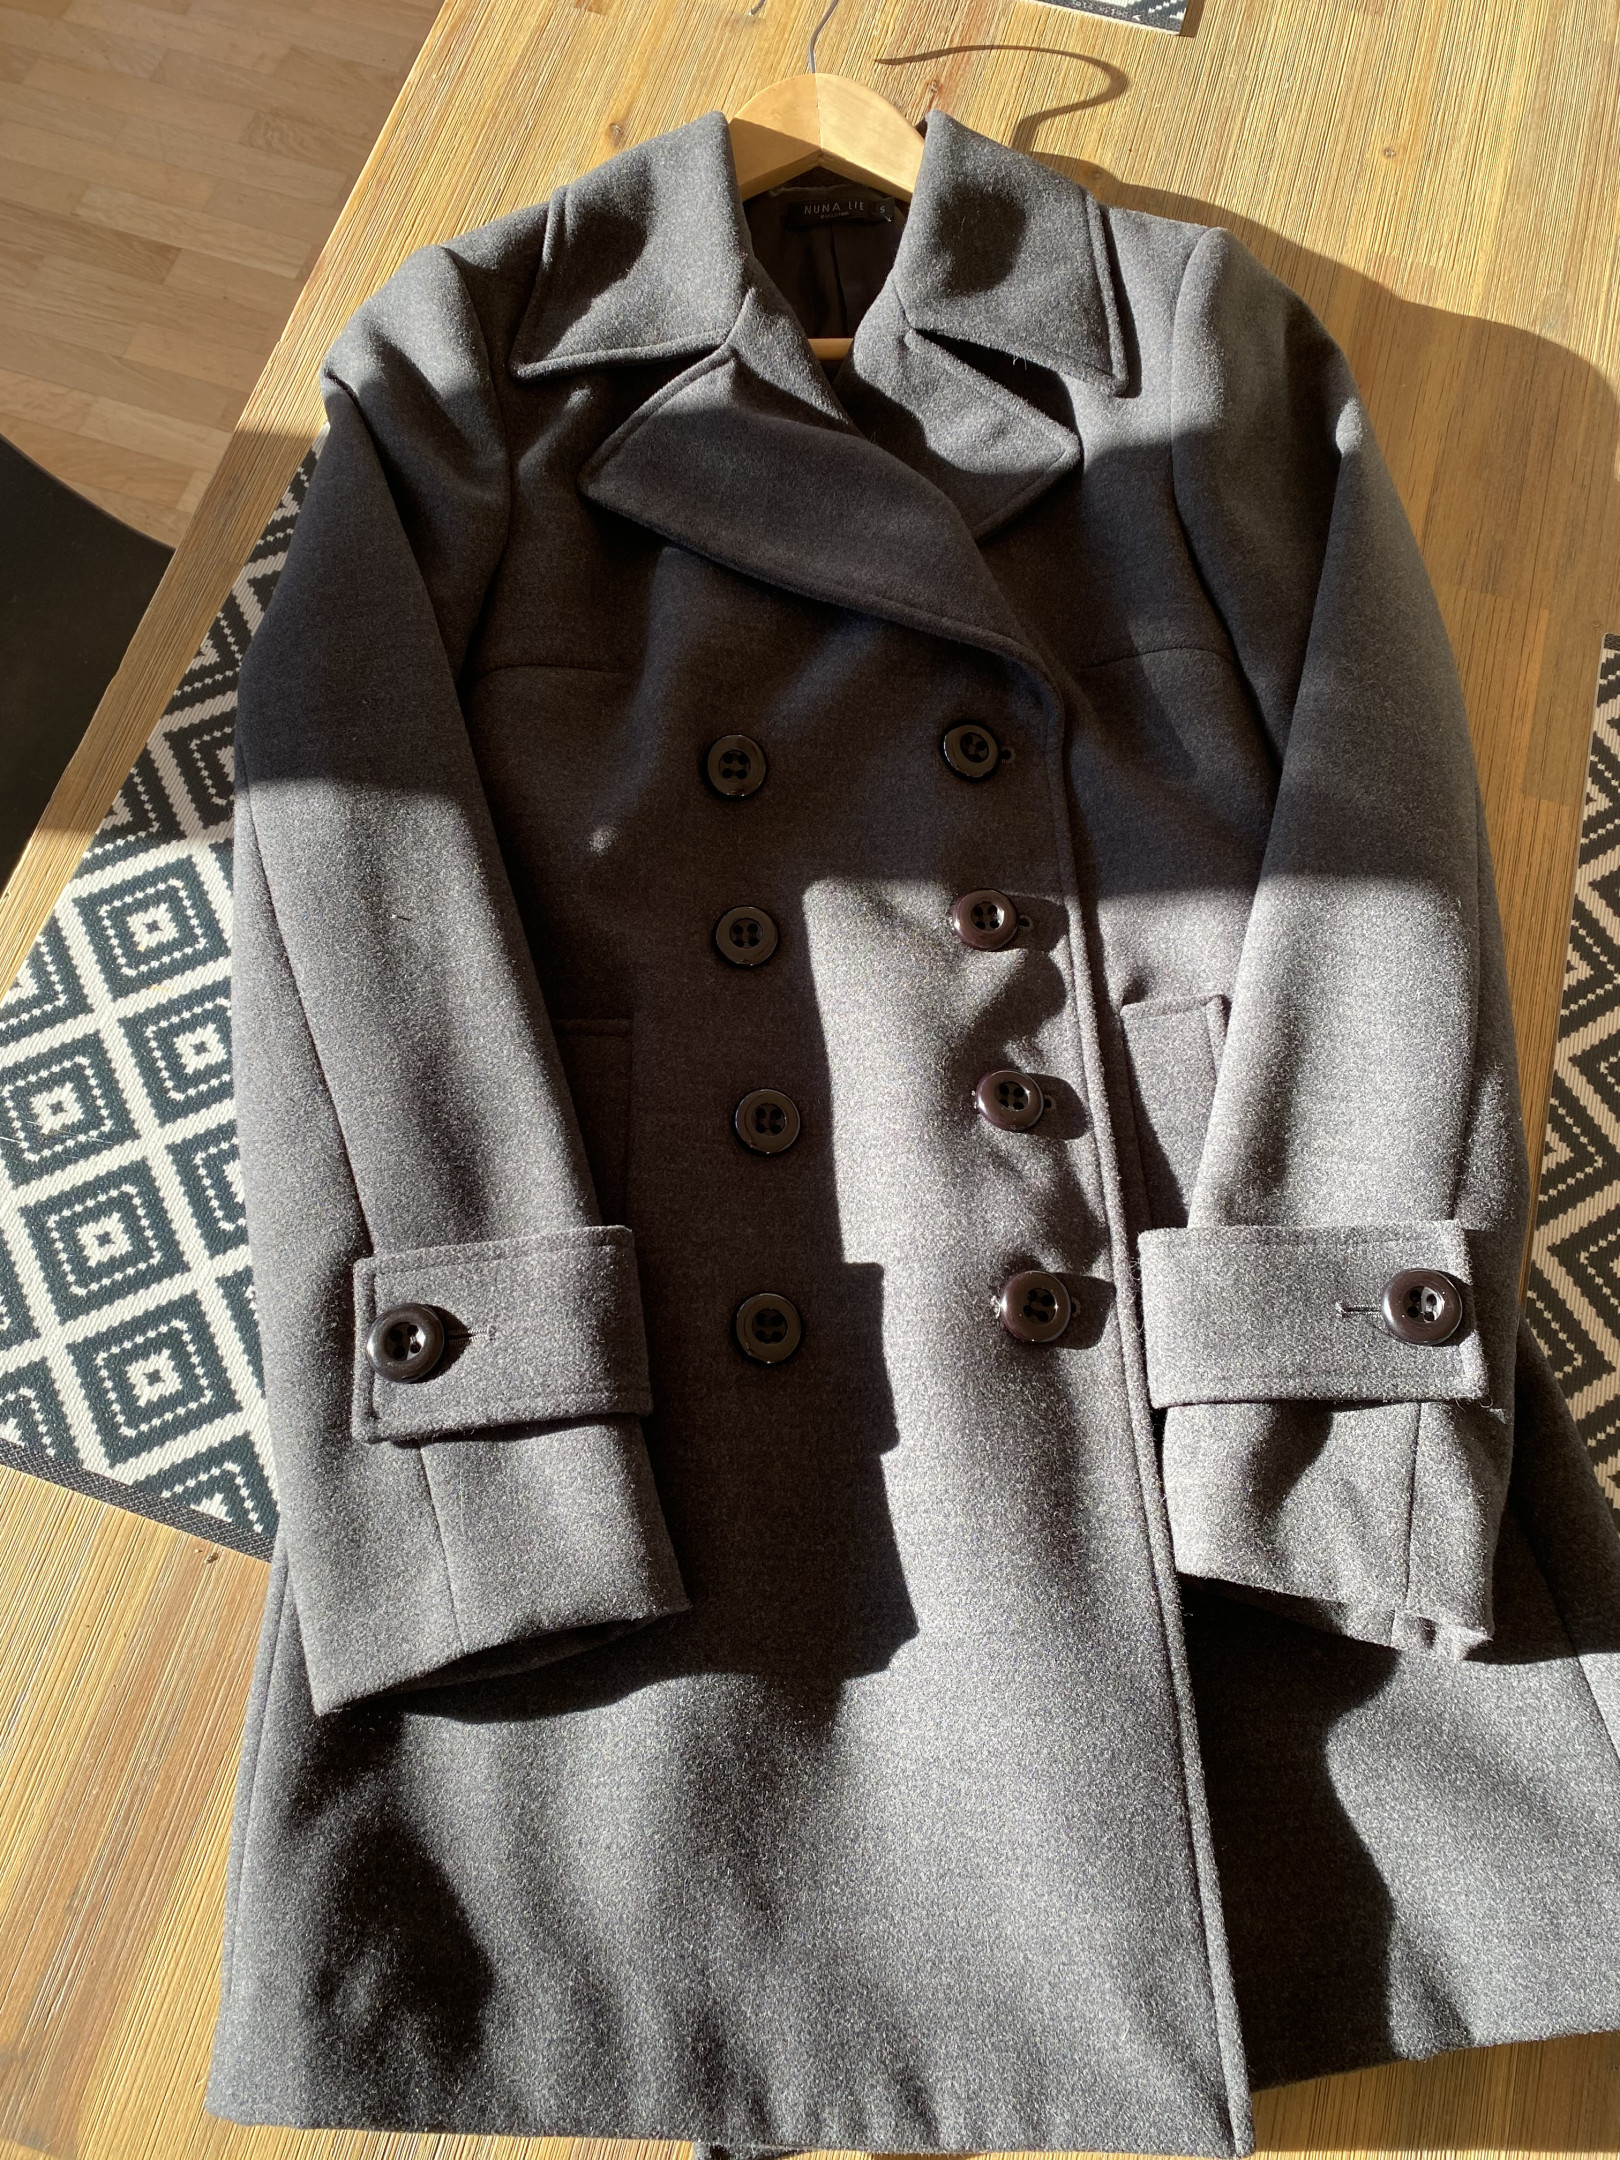 Manteau gris marque NunaLie